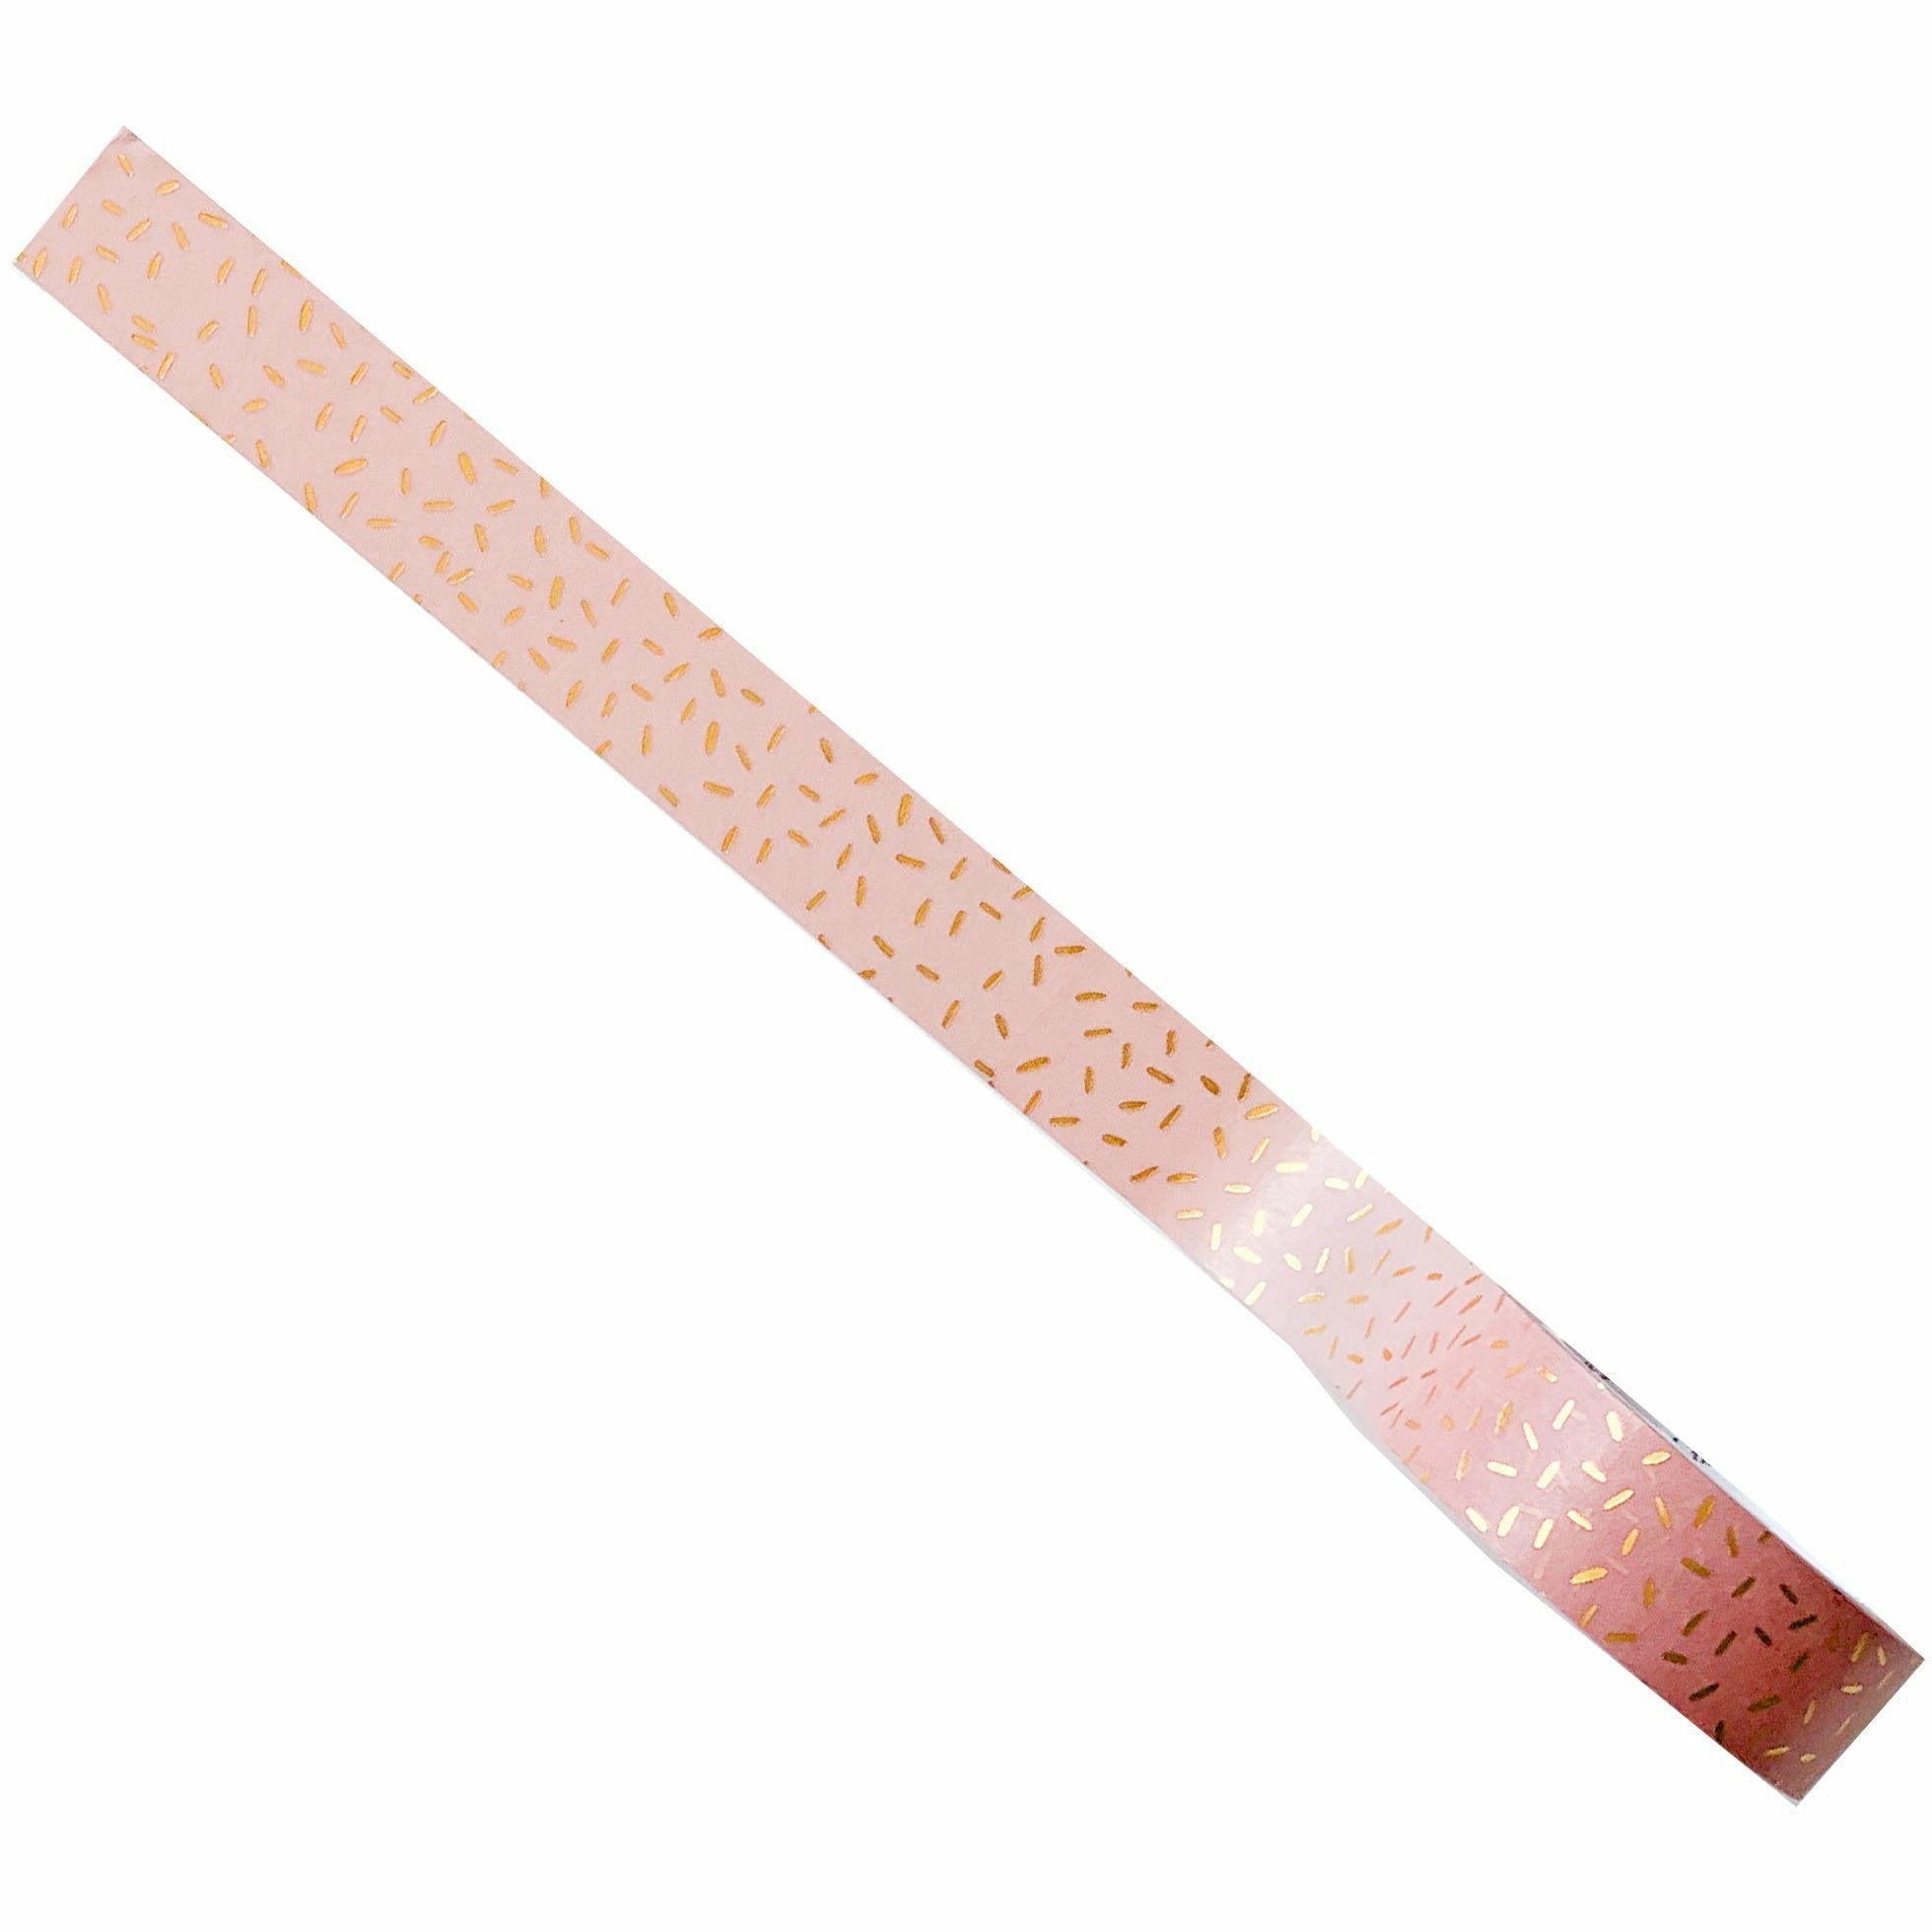 Gorgeous Pink Washi Tape with Metallic Golden Confetti Pattern